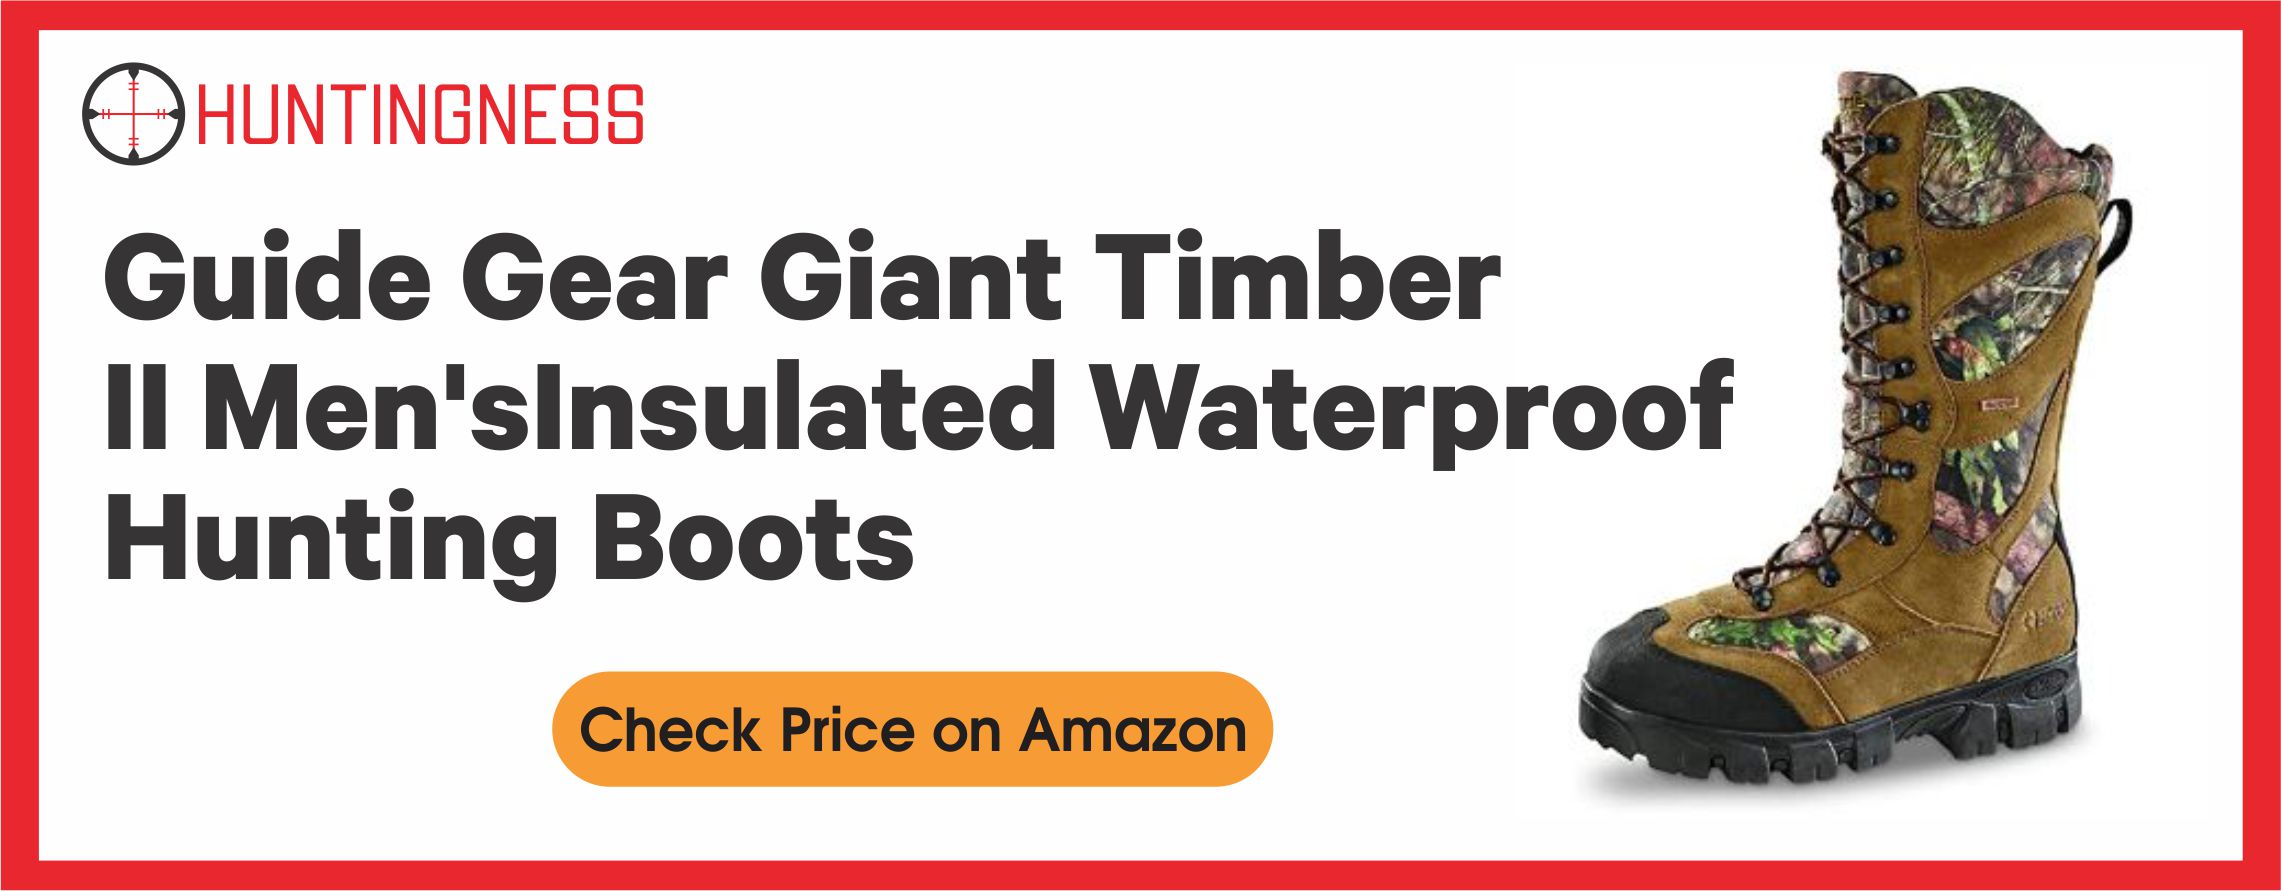 Guide Gear Giant Timber II Men'sInsulated Waterproof Hunting Boots, 1,400-gram, Mossy Oak